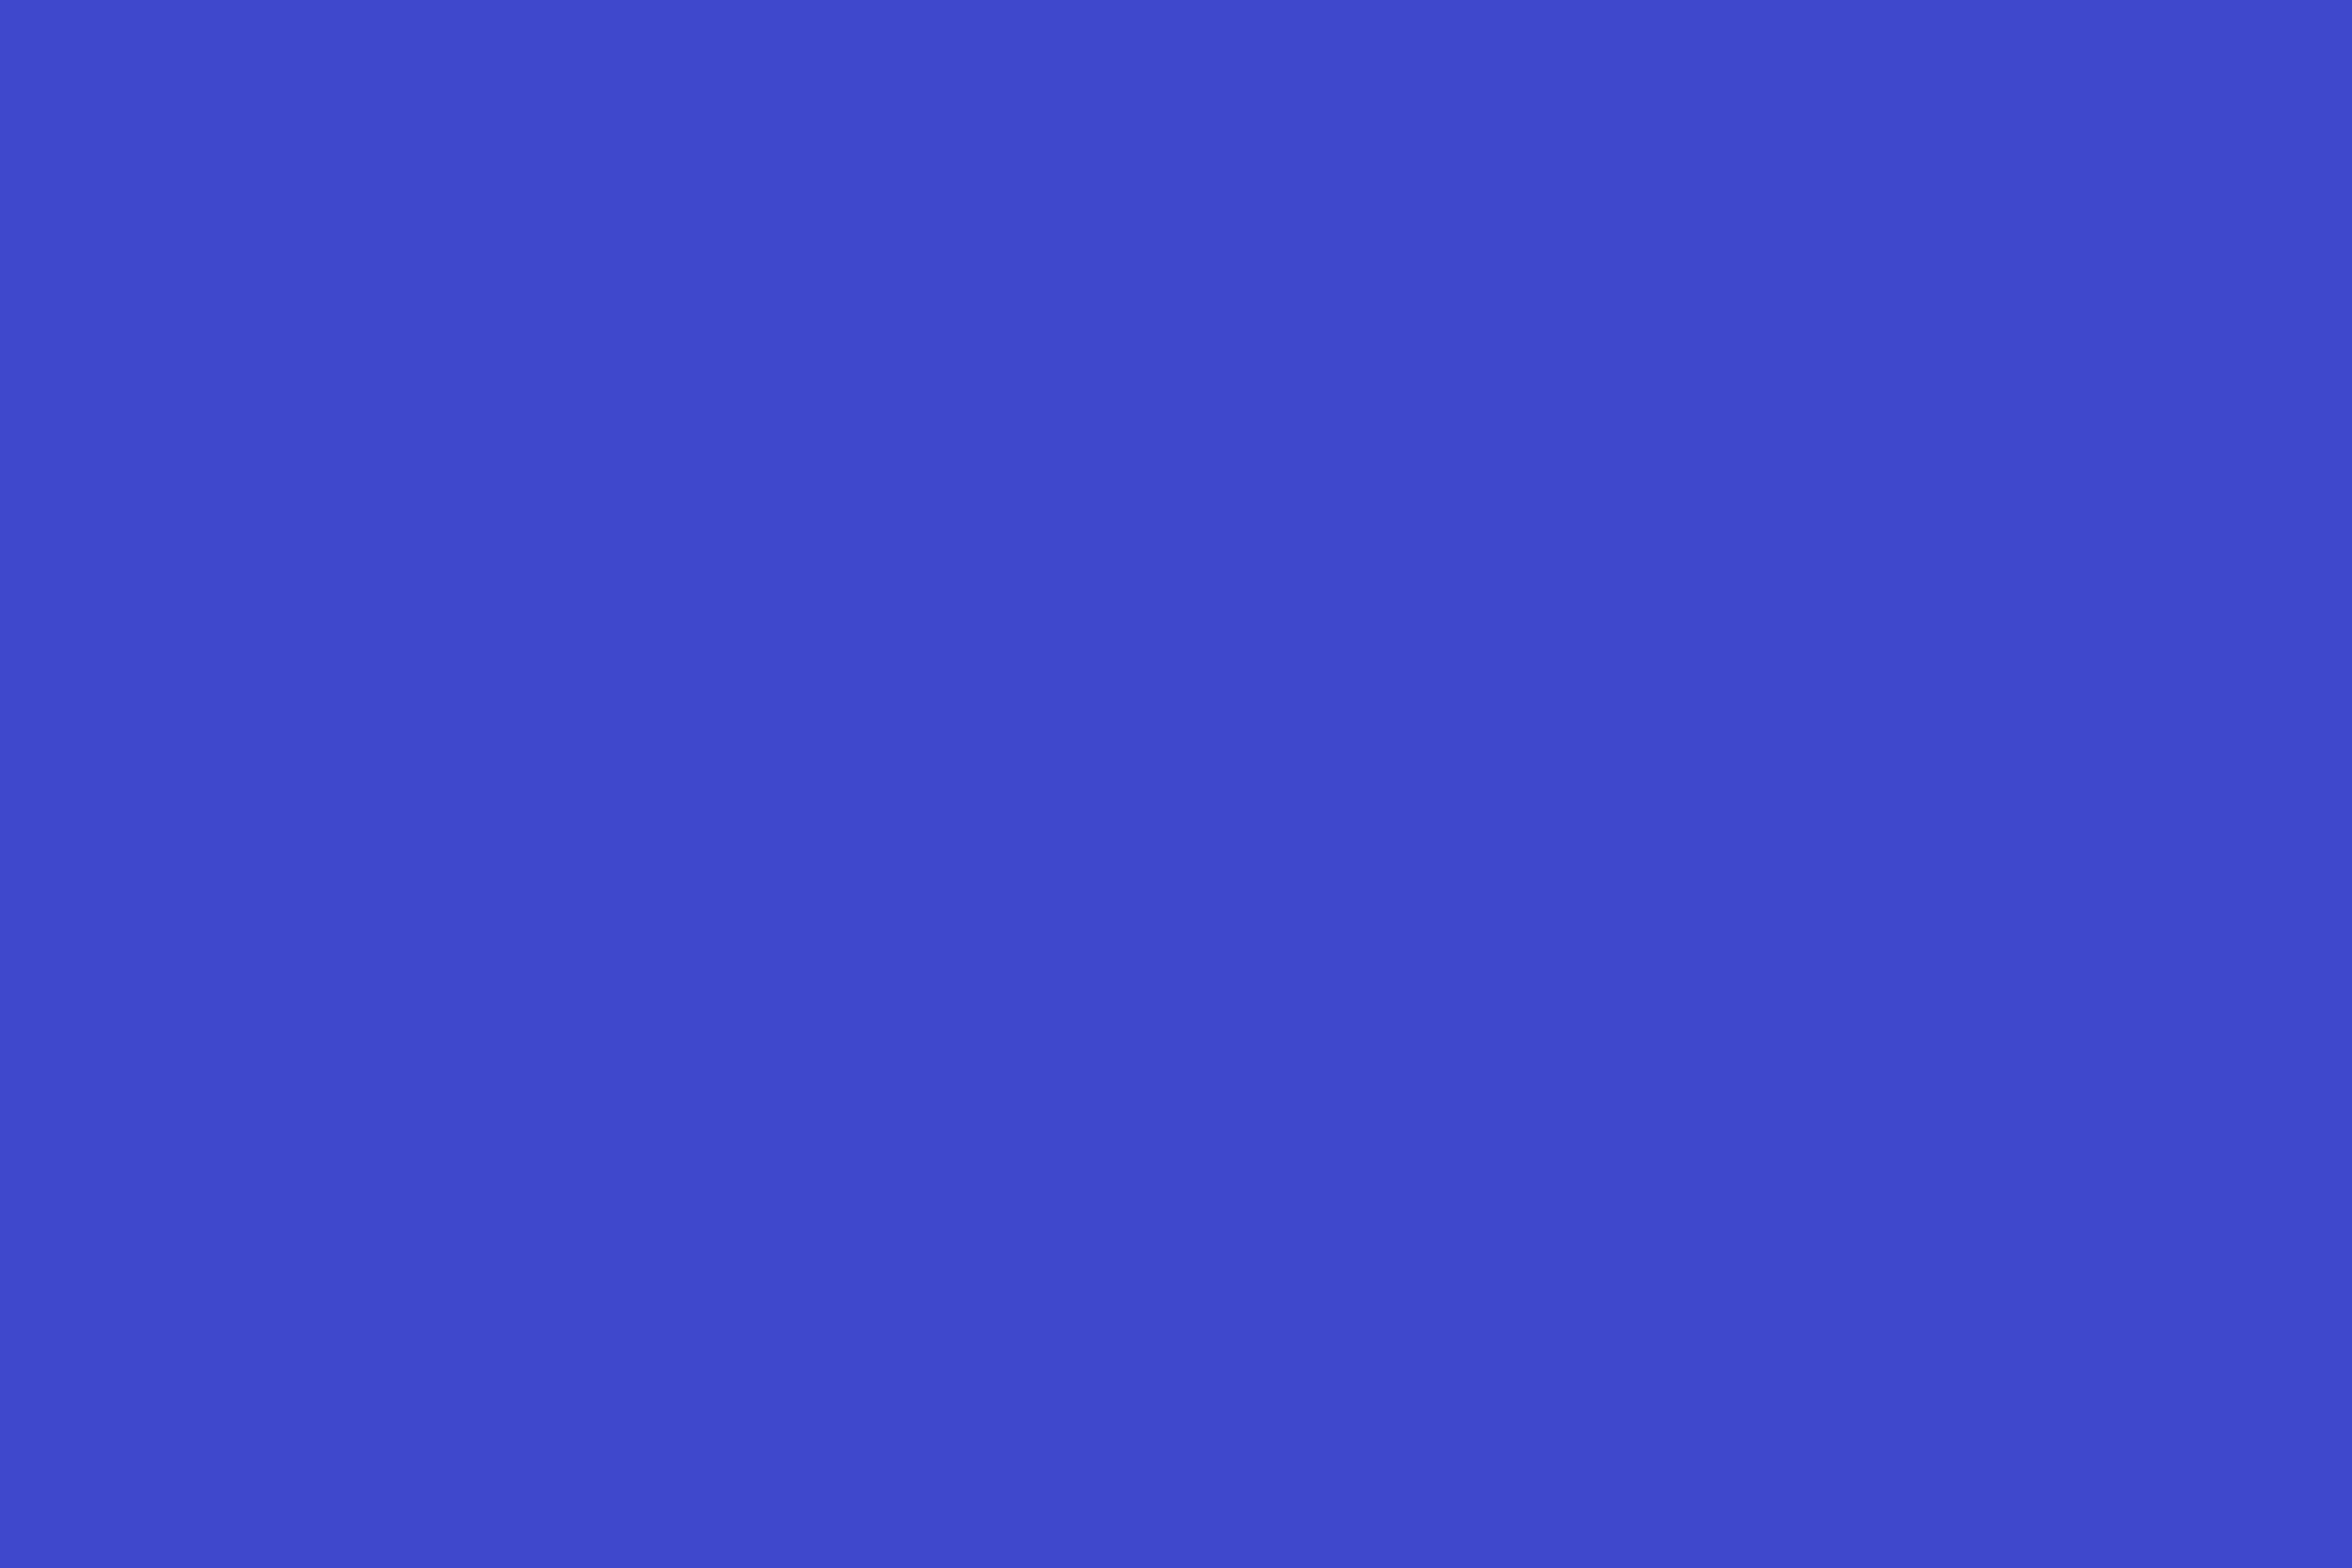 Blue Background Wallpaper 6000×4000 px